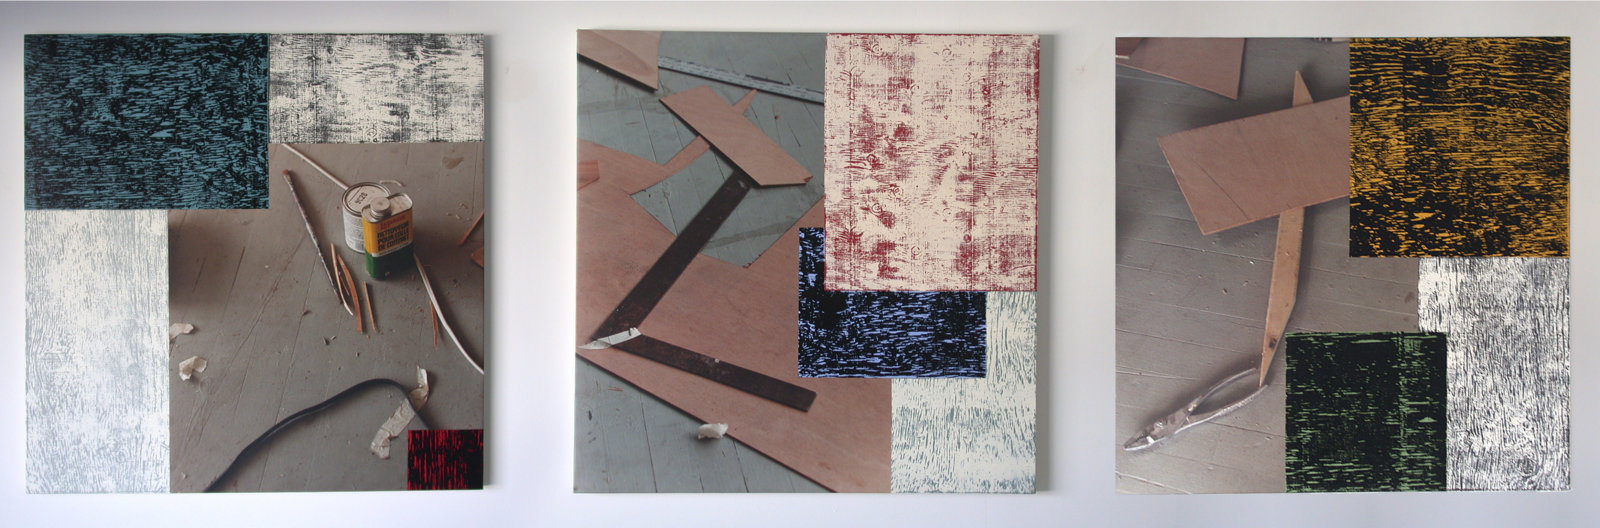 Ian Wallace, The Studio Floor I–III, 1996, 3 acrylic, photolaminate and ink monoprint on canvas panels, 36 x 36 in. (91 x 91 cm)